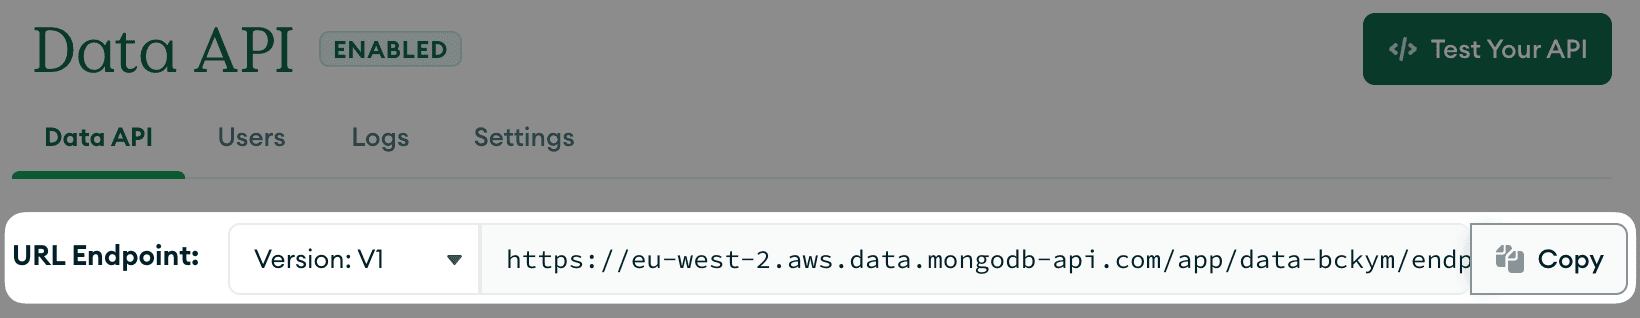 MongoDB Data API URL Endpoint